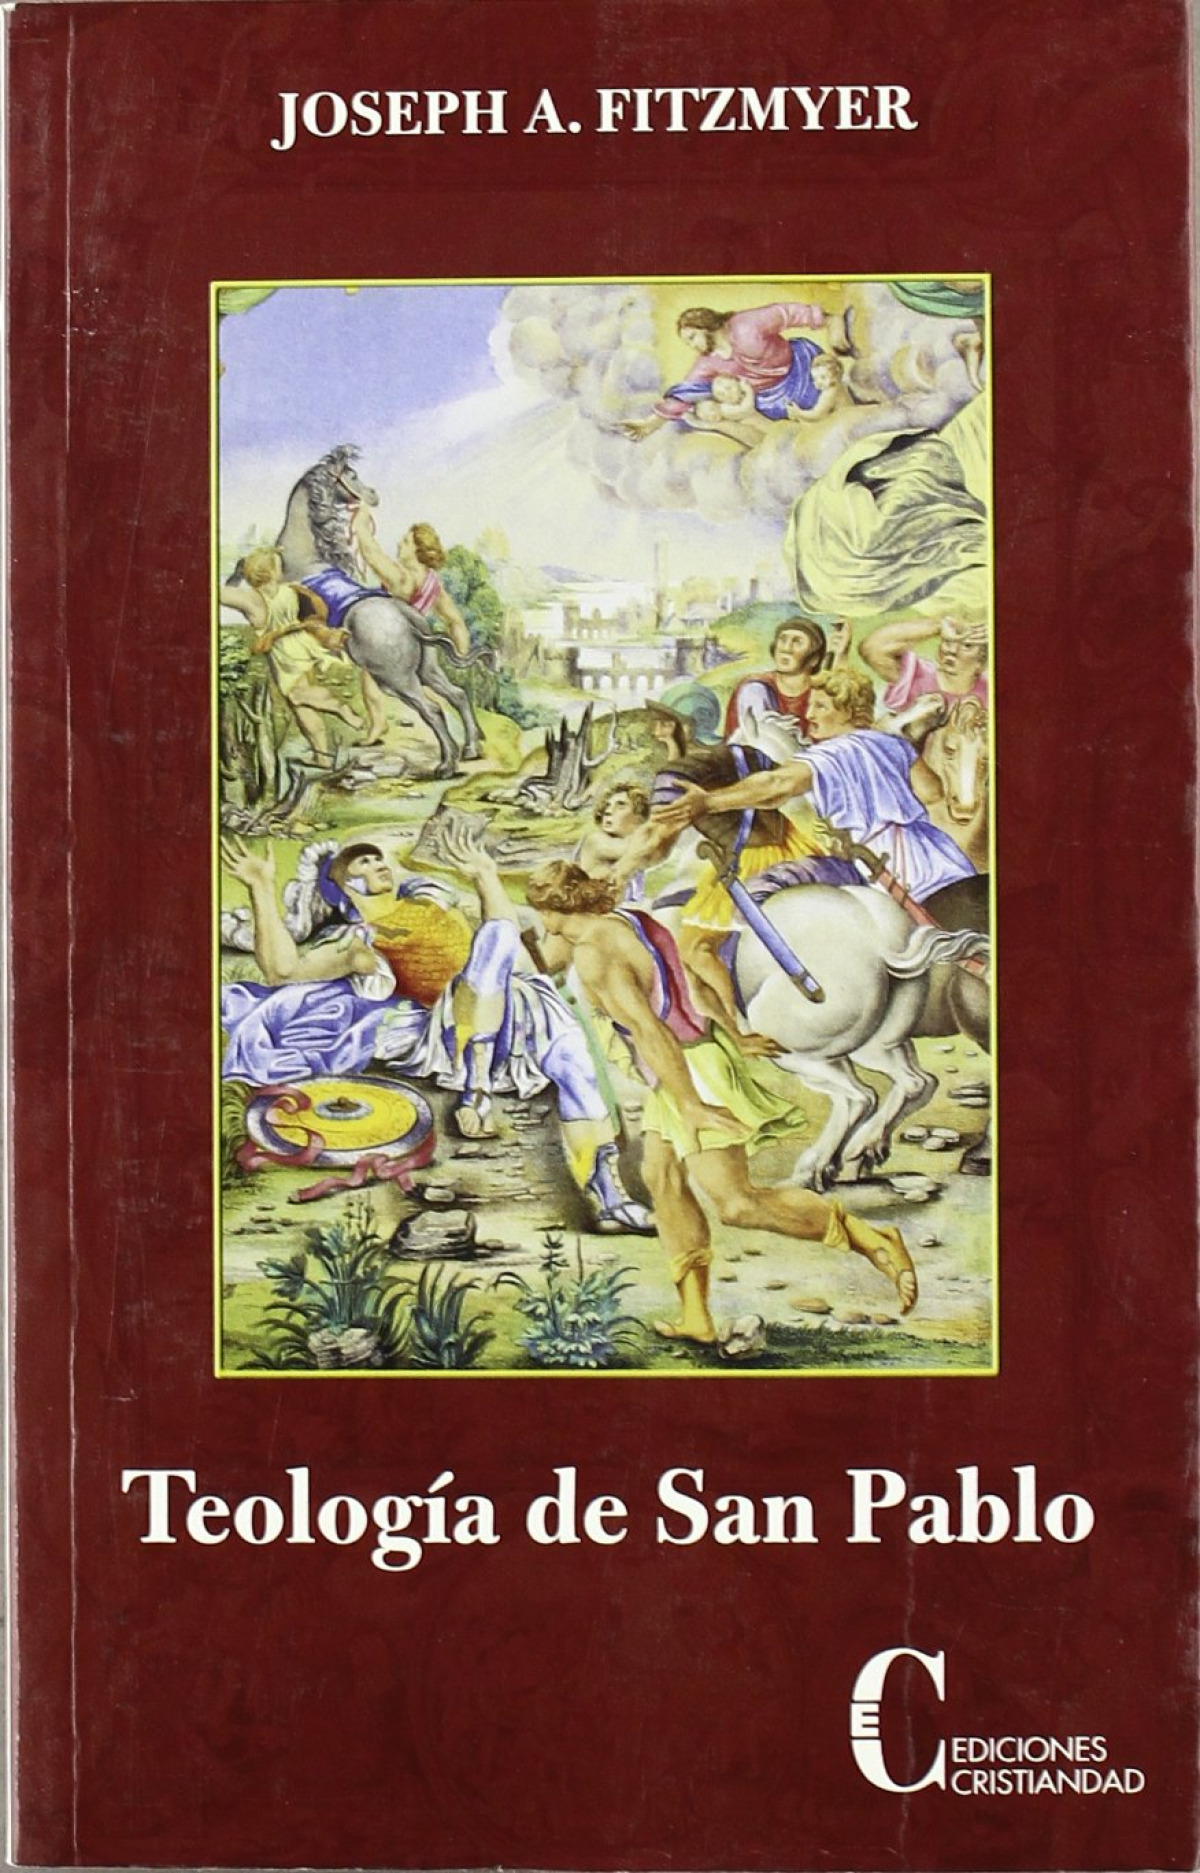 Teologia de san pablo. (cristiandad) - Fitzmyer, Joseph